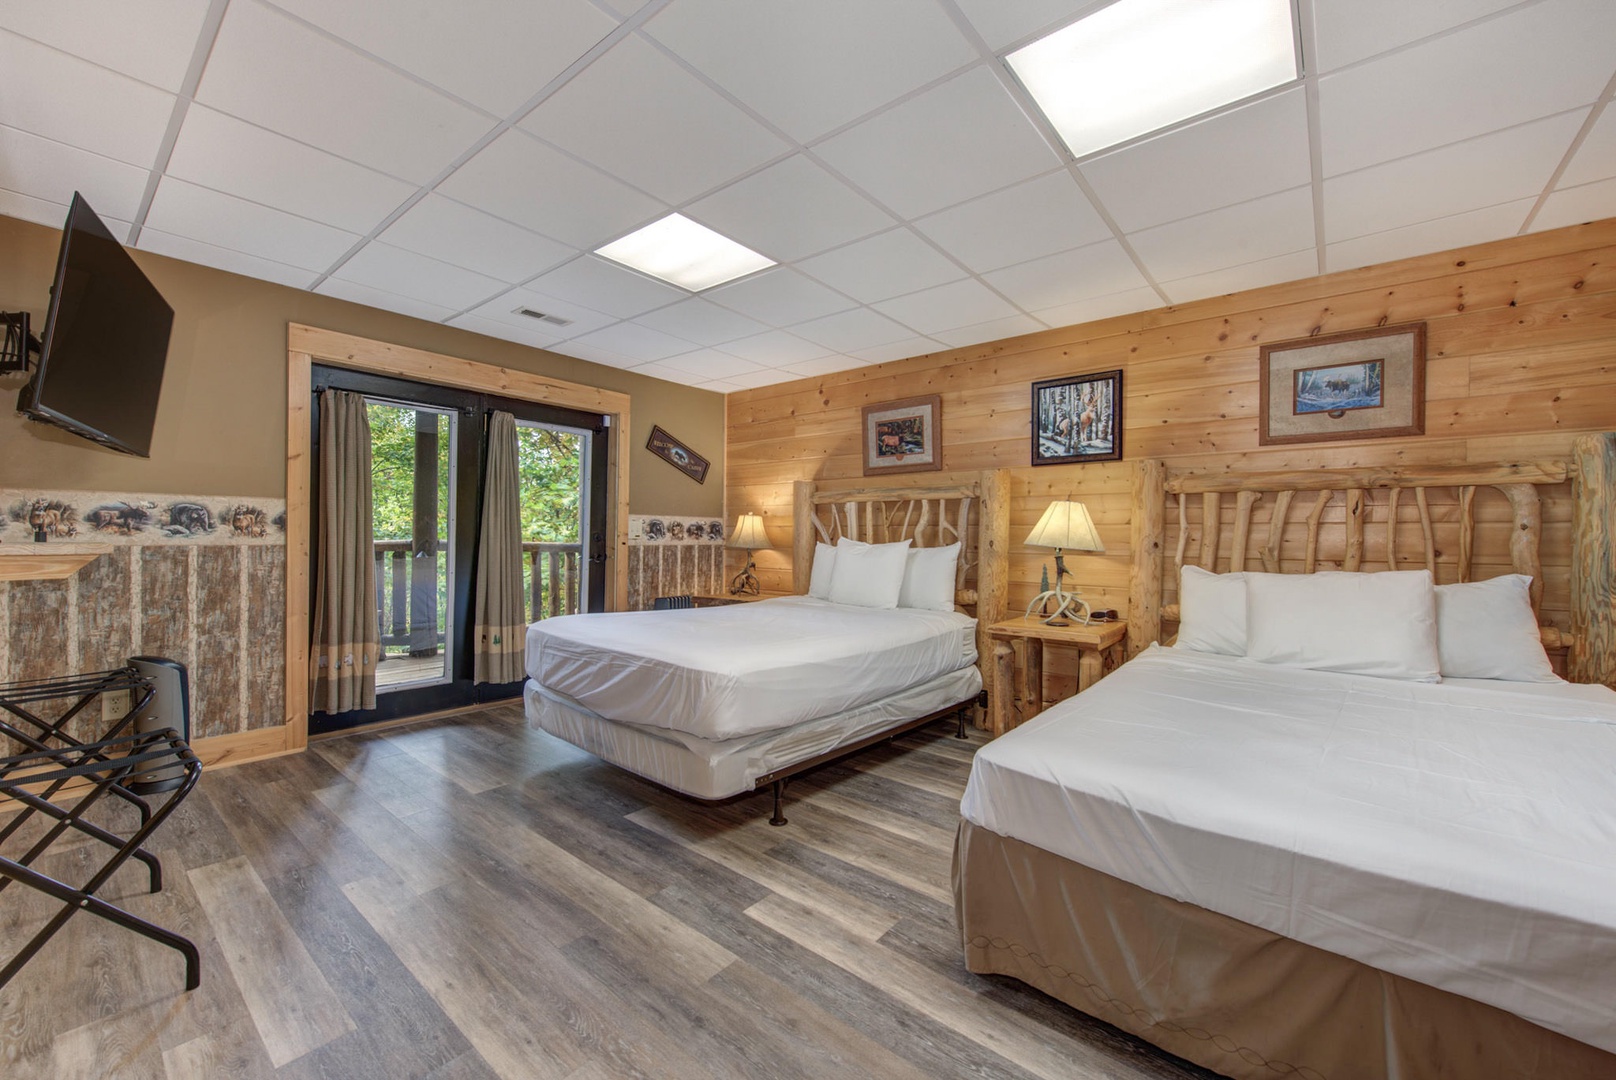 Bedroom 6 with 2 Queen beds, Smart TV, deck access, and private en-suite